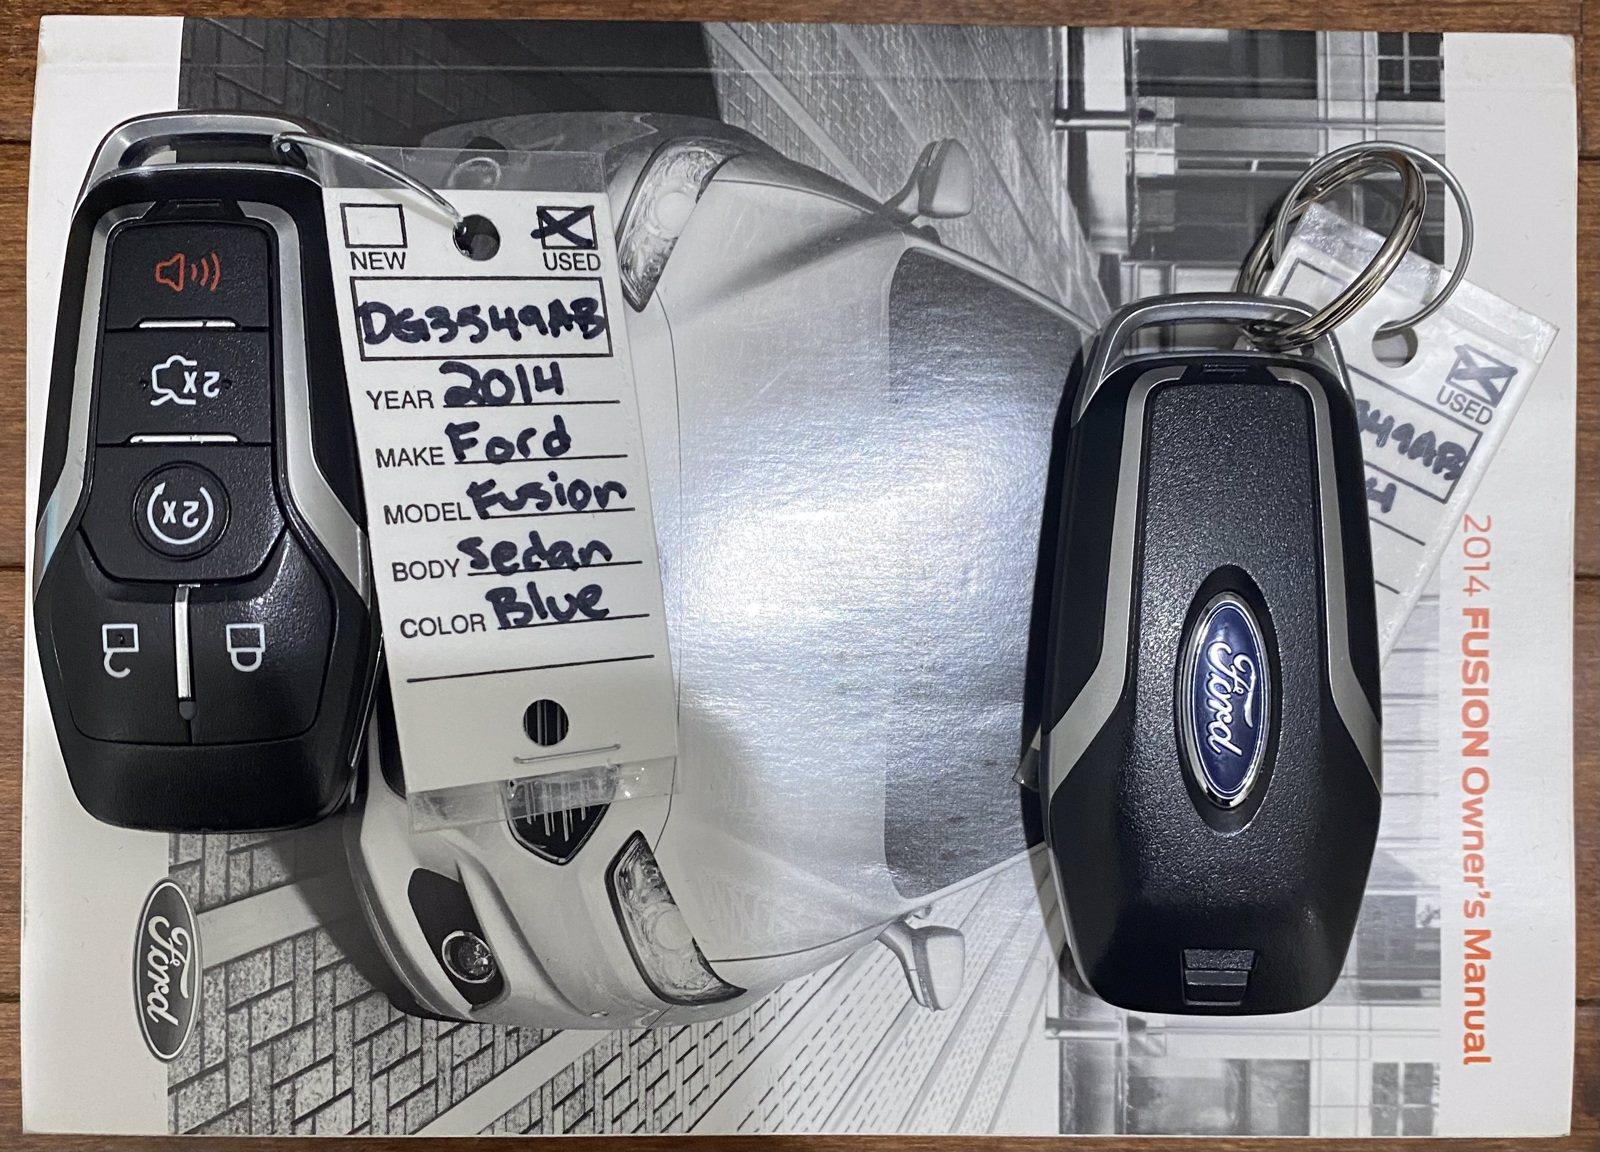 Used 2014 Ford Fusion Titanium | Downers Grove, IL